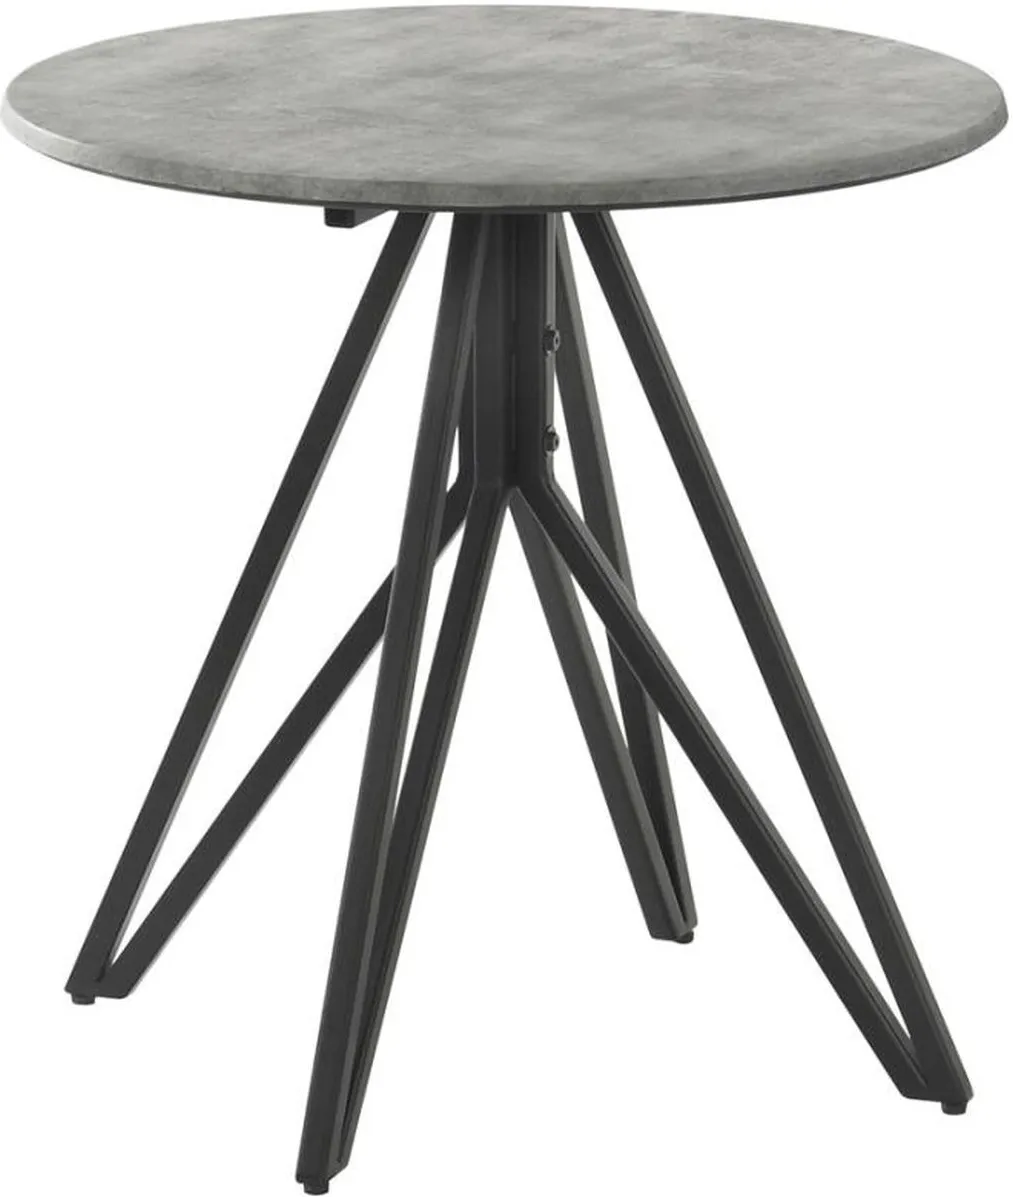 Coaster® Hadi Cement End Table with Gunmetal Hairpin Leg